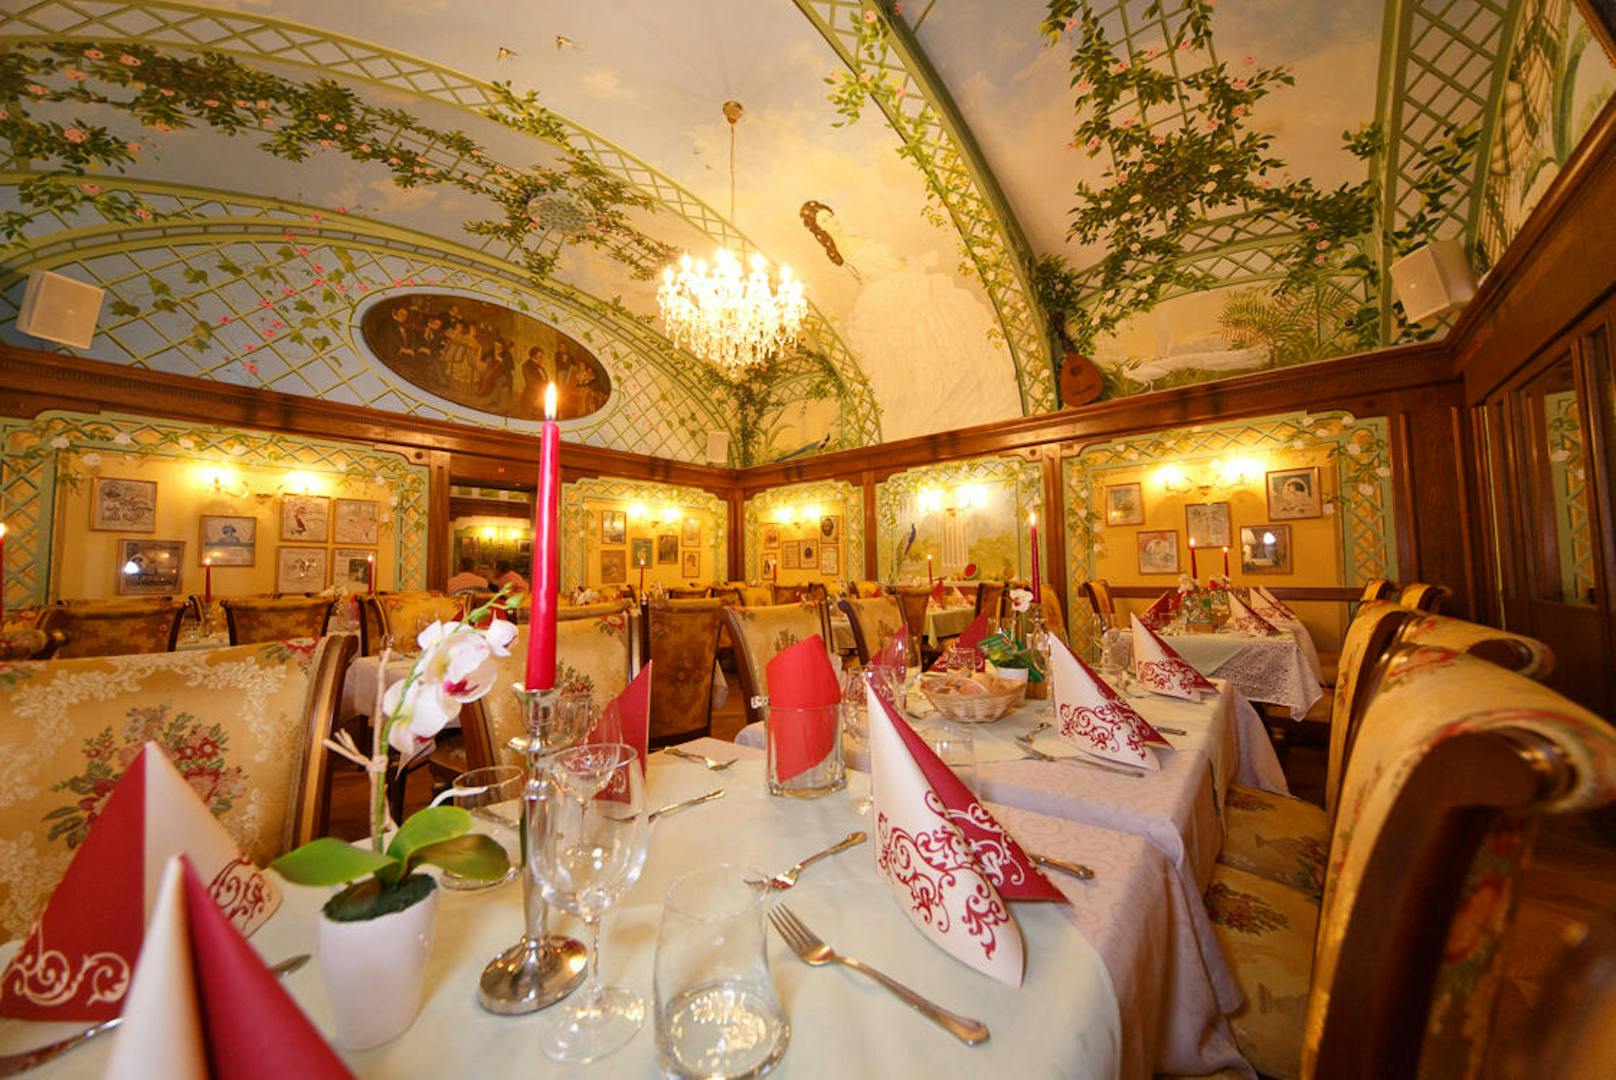 Das Restaurant "Schönbrunner Stöckl"